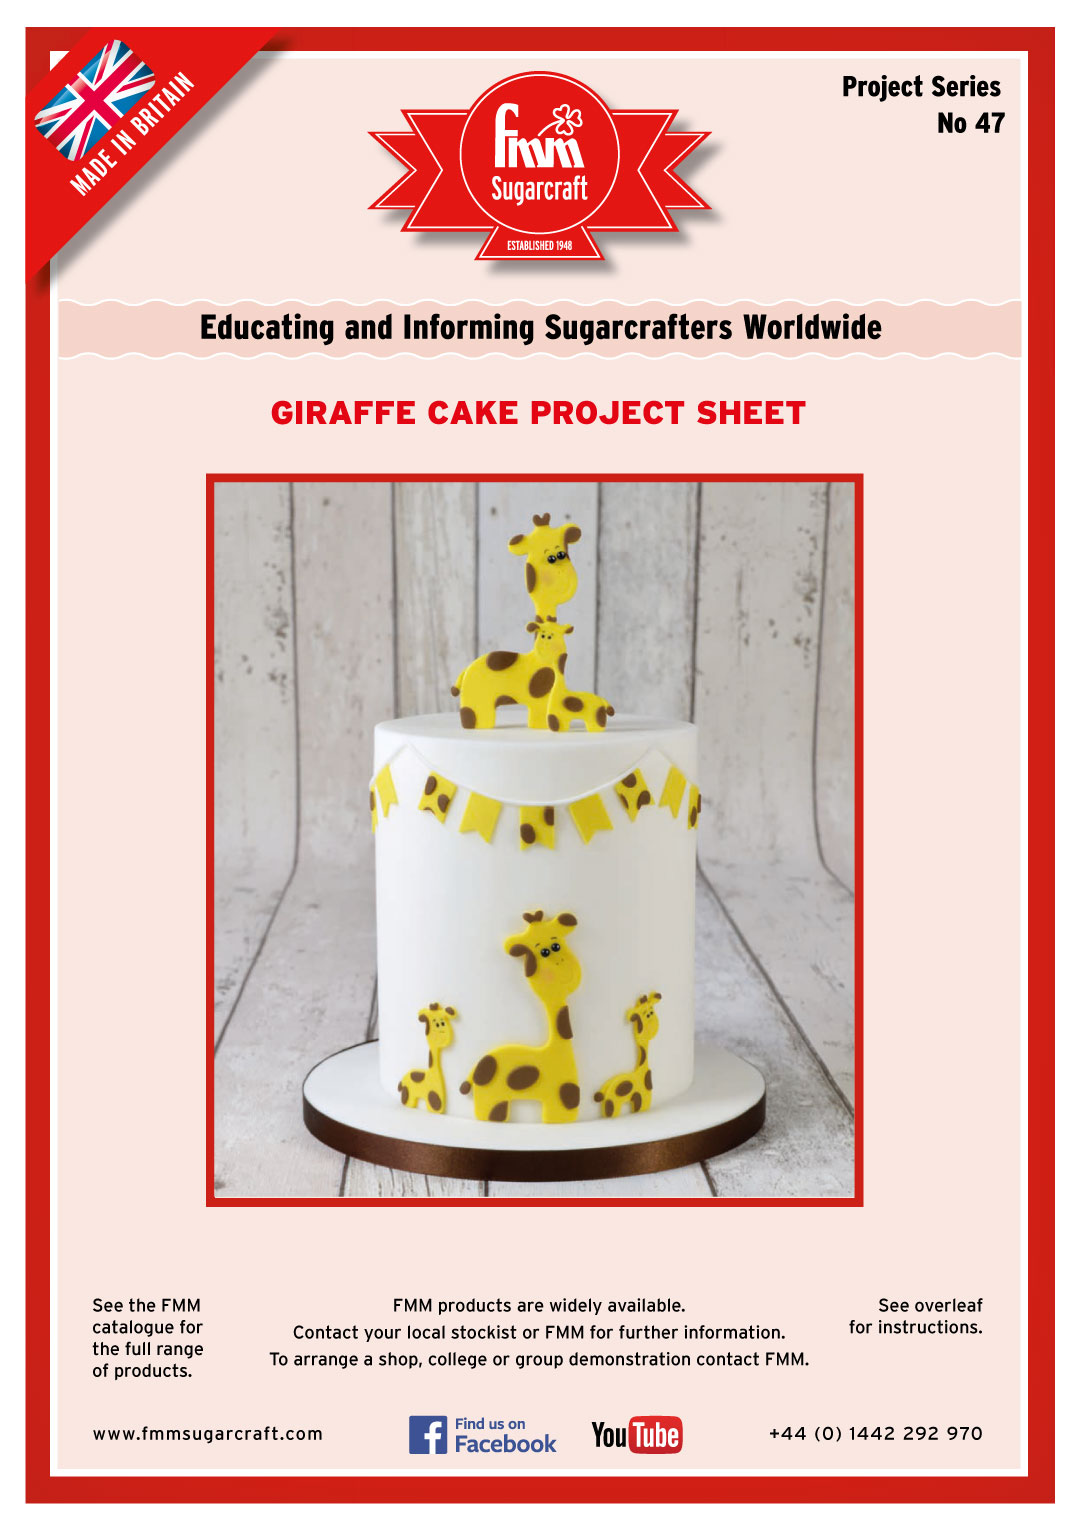 How to make a Giraffe Cake